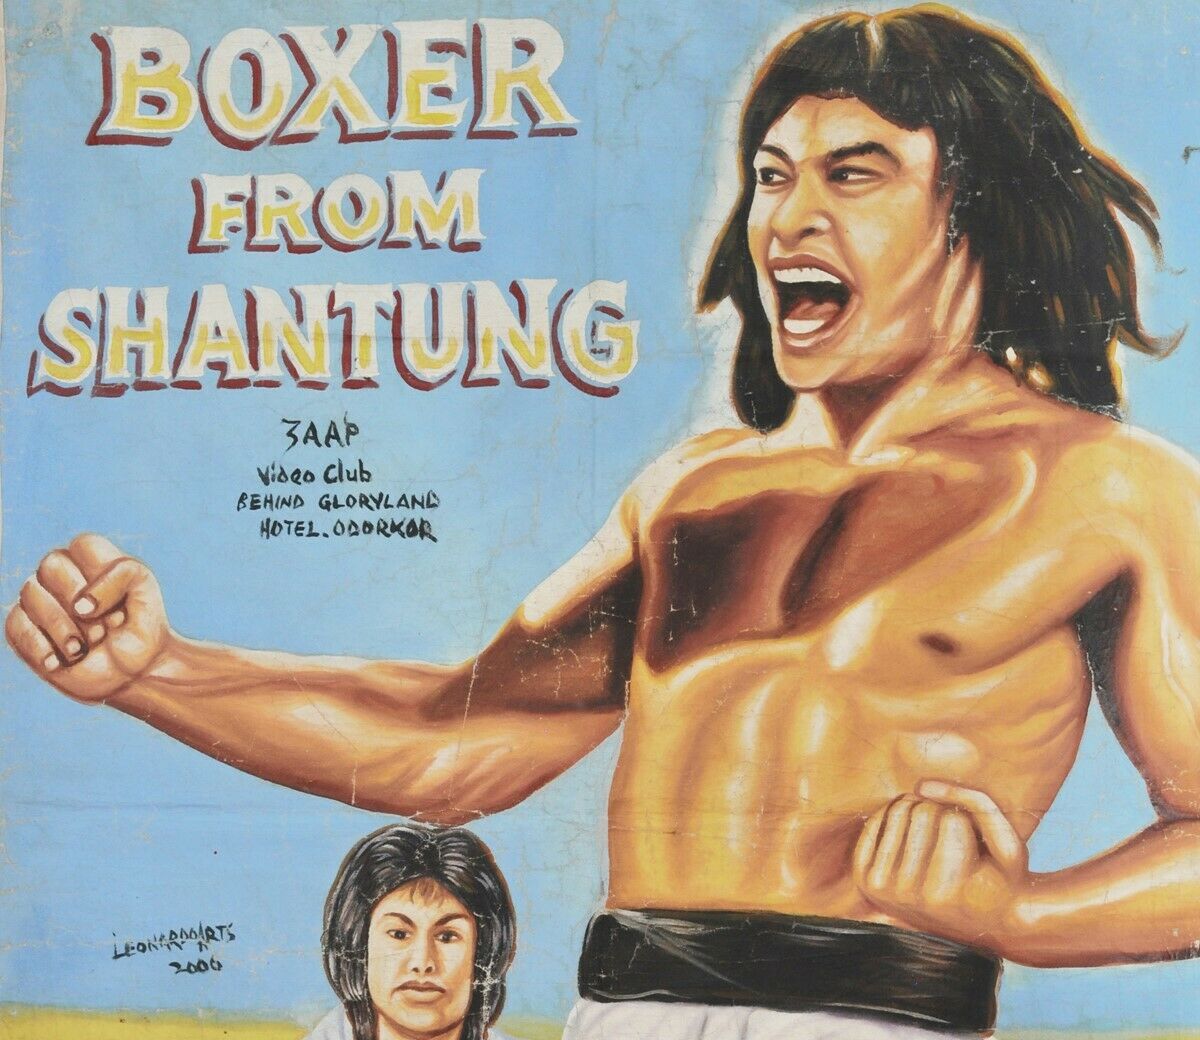 Ghana Poster del film africano del cinema Boxer dipinto a mano da Shantung - Tribalgh